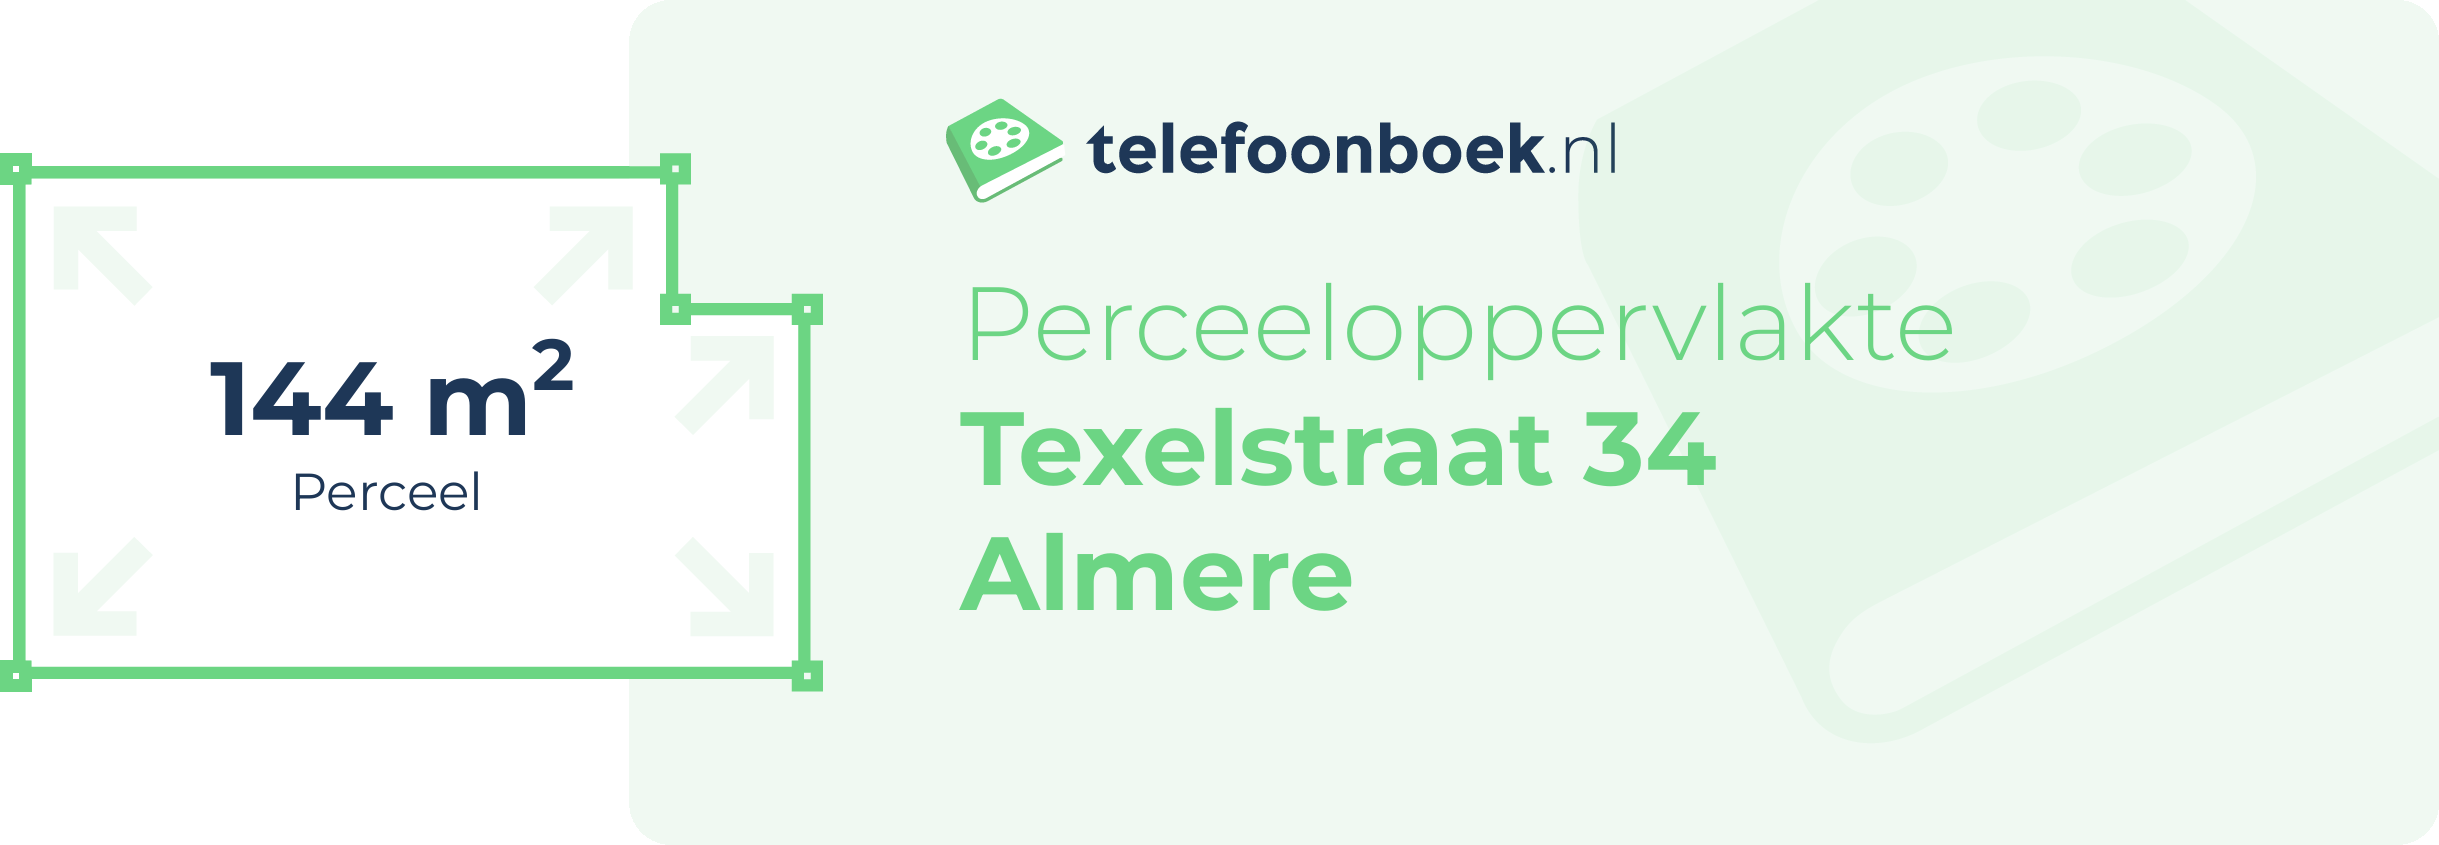 Perceeloppervlakte Texelstraat 34 Almere